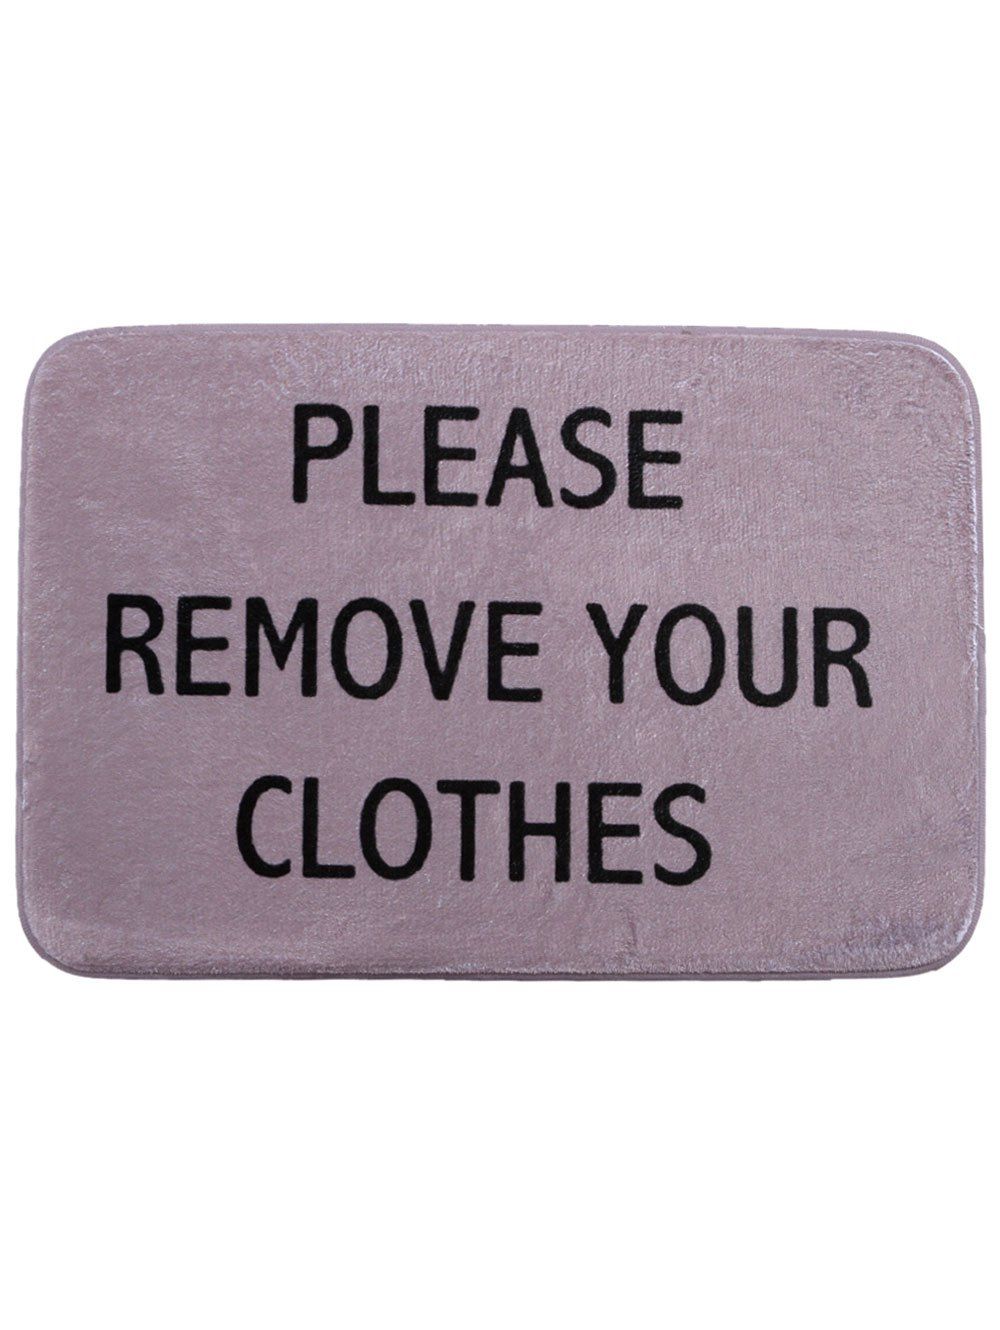 Remove your clothes. Please remove your. Купи плиз. Buy me please. Please купить